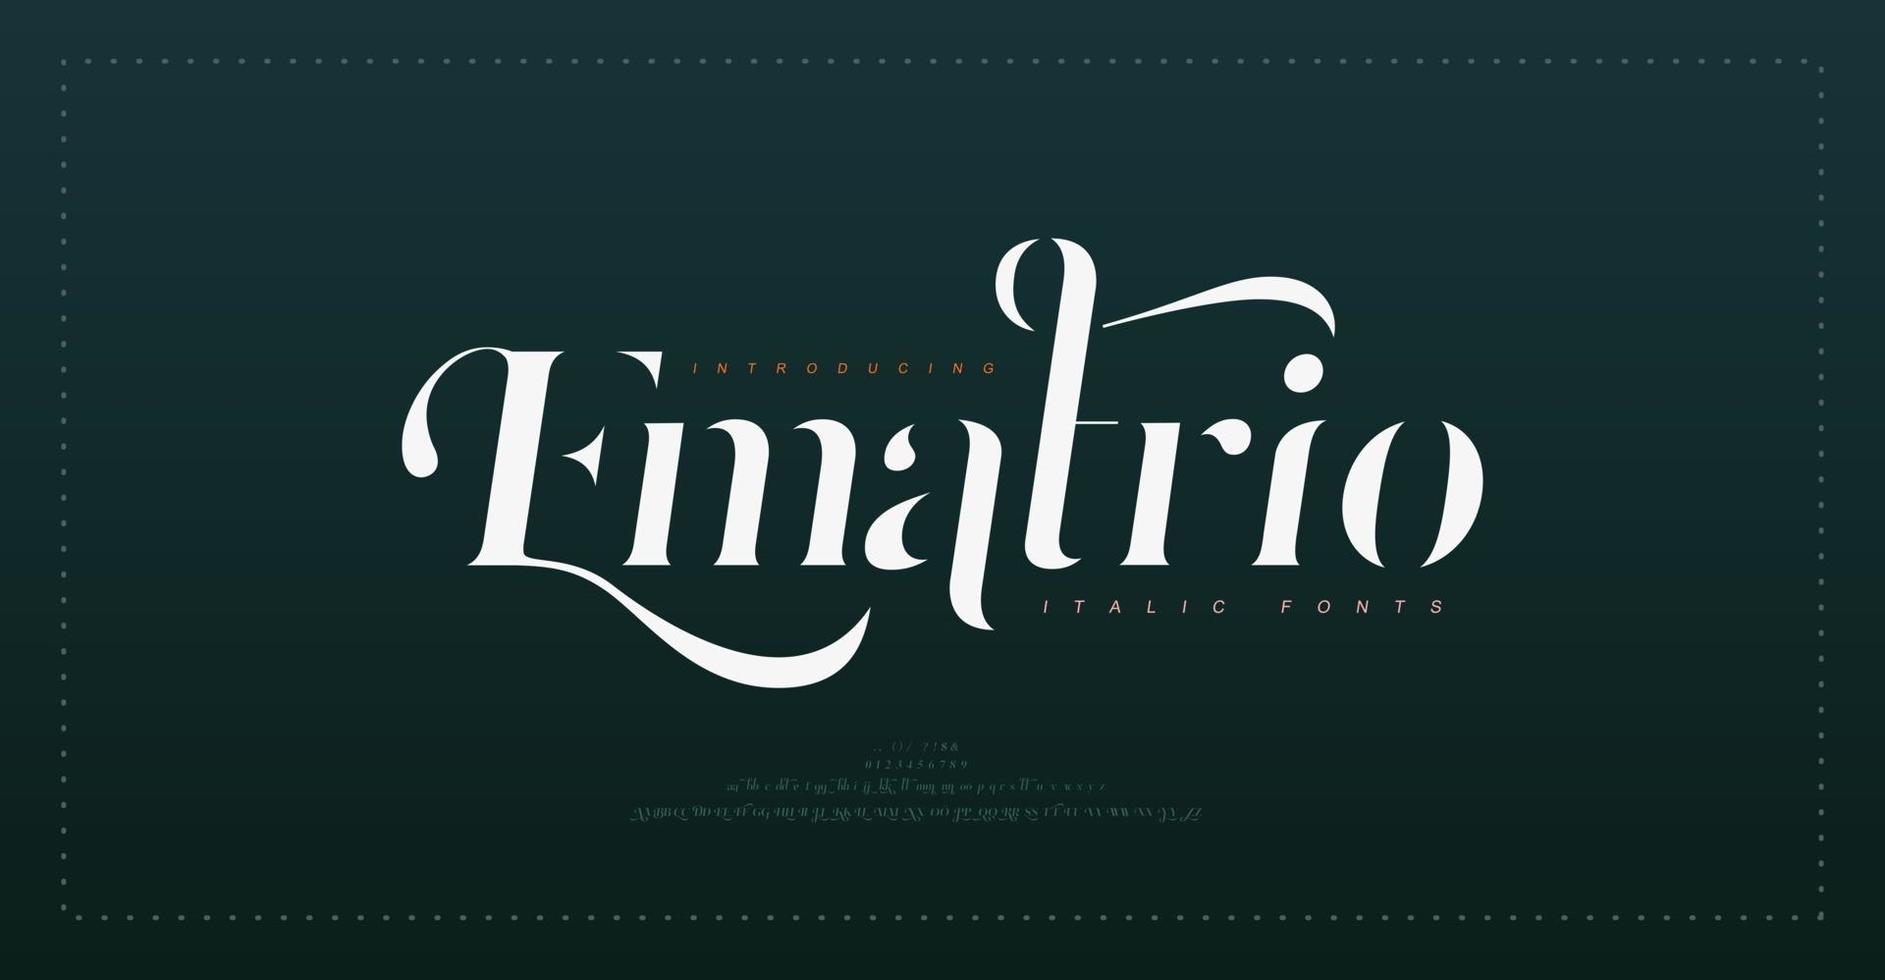 Luxury vintage font vector